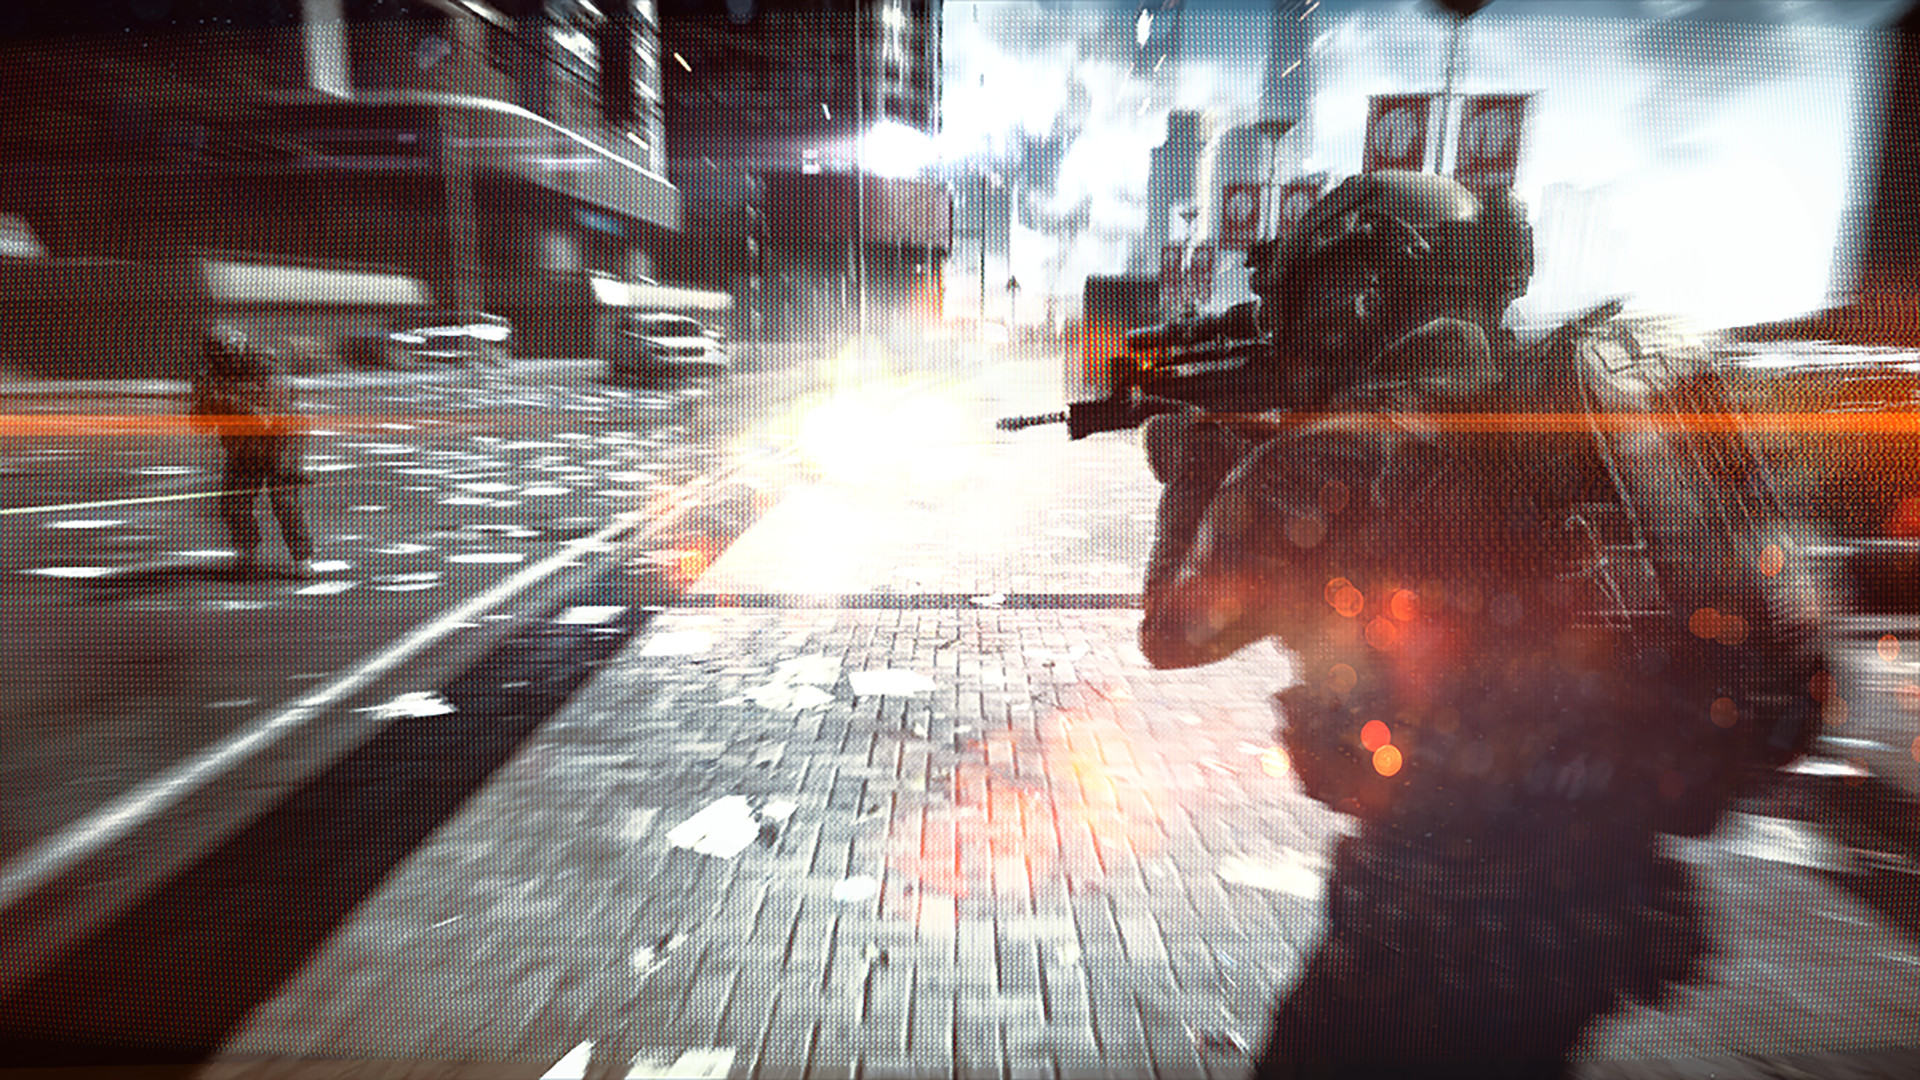 Buy Battlefield 4 Soldier Shortcut Bundle (DLC) (PC) Steam Key GLOBAL